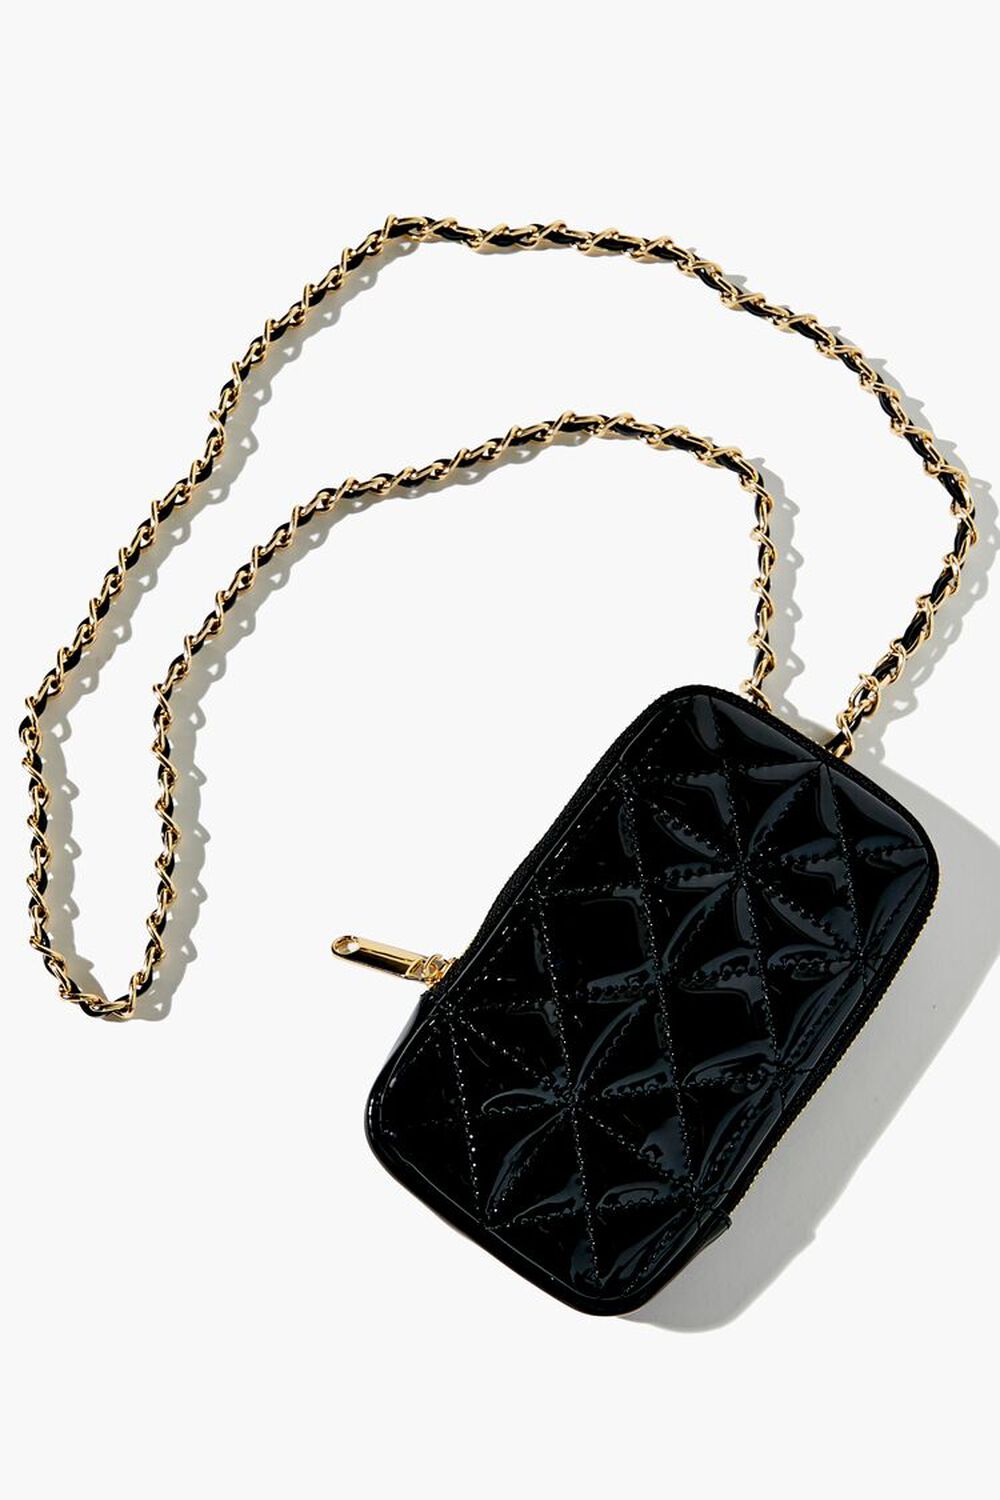 BLACK Faux Patent Leather Mini Crossbody Bag, image 1